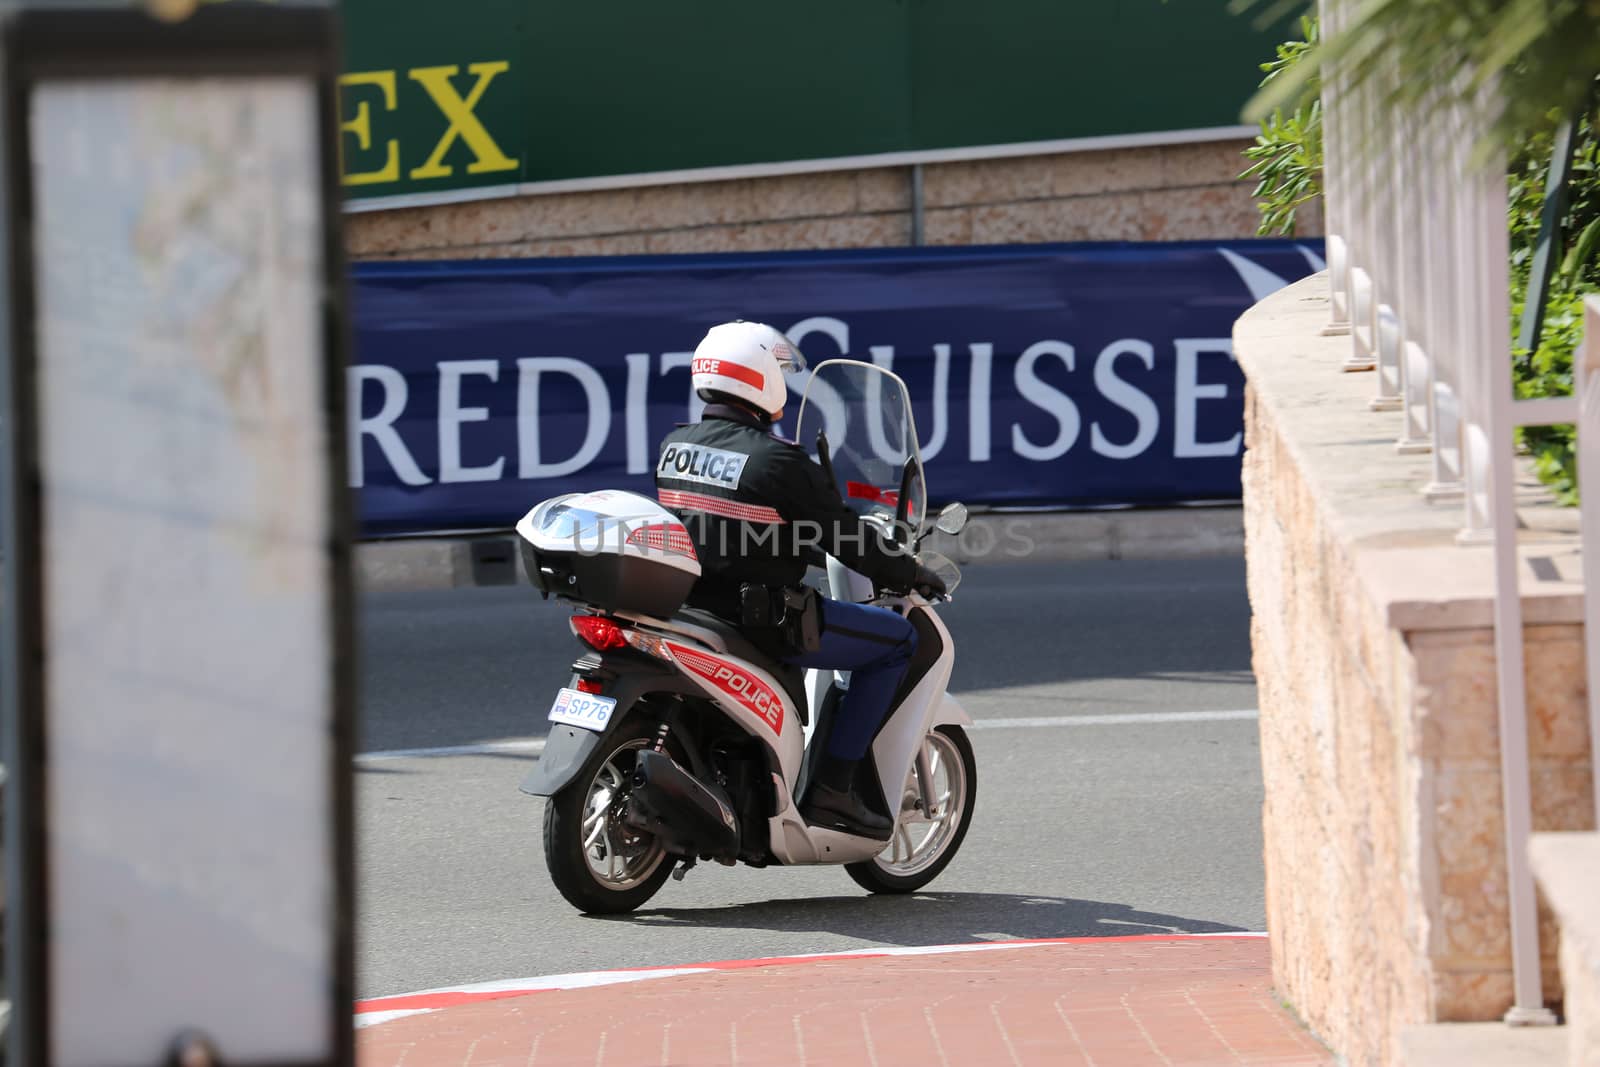 Monte-Carlo, Monaco - May 18, 2016: Monaco Policeman Patrol on Motor Scooter on a Street in Monaco